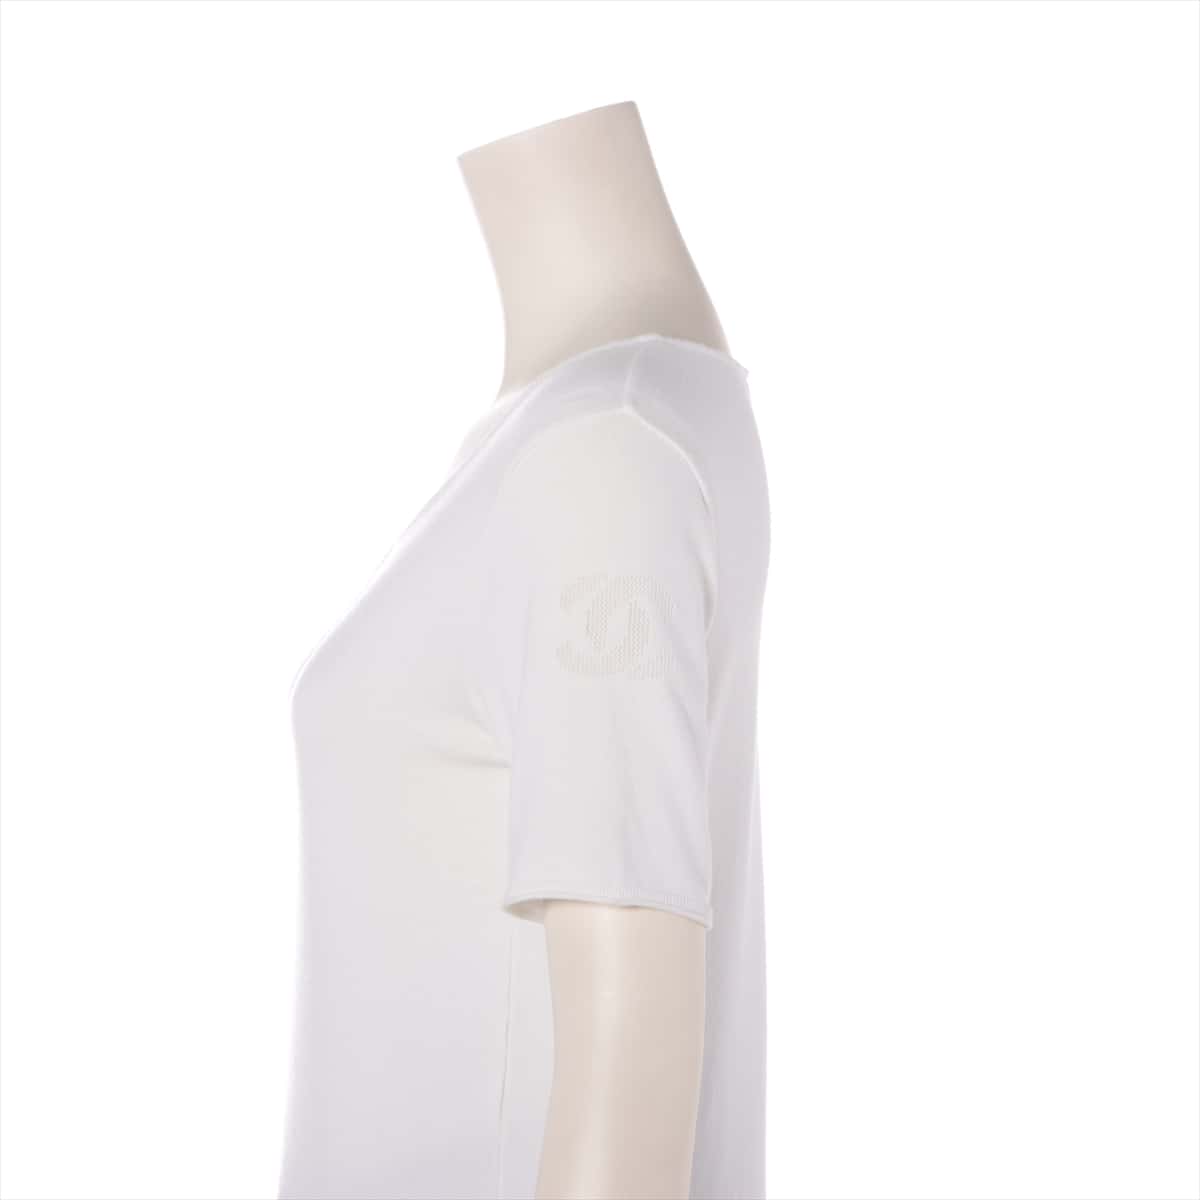 Chanel P43 Rayon * Naylon T-shirt 38 Ladies' White  Coco Mark